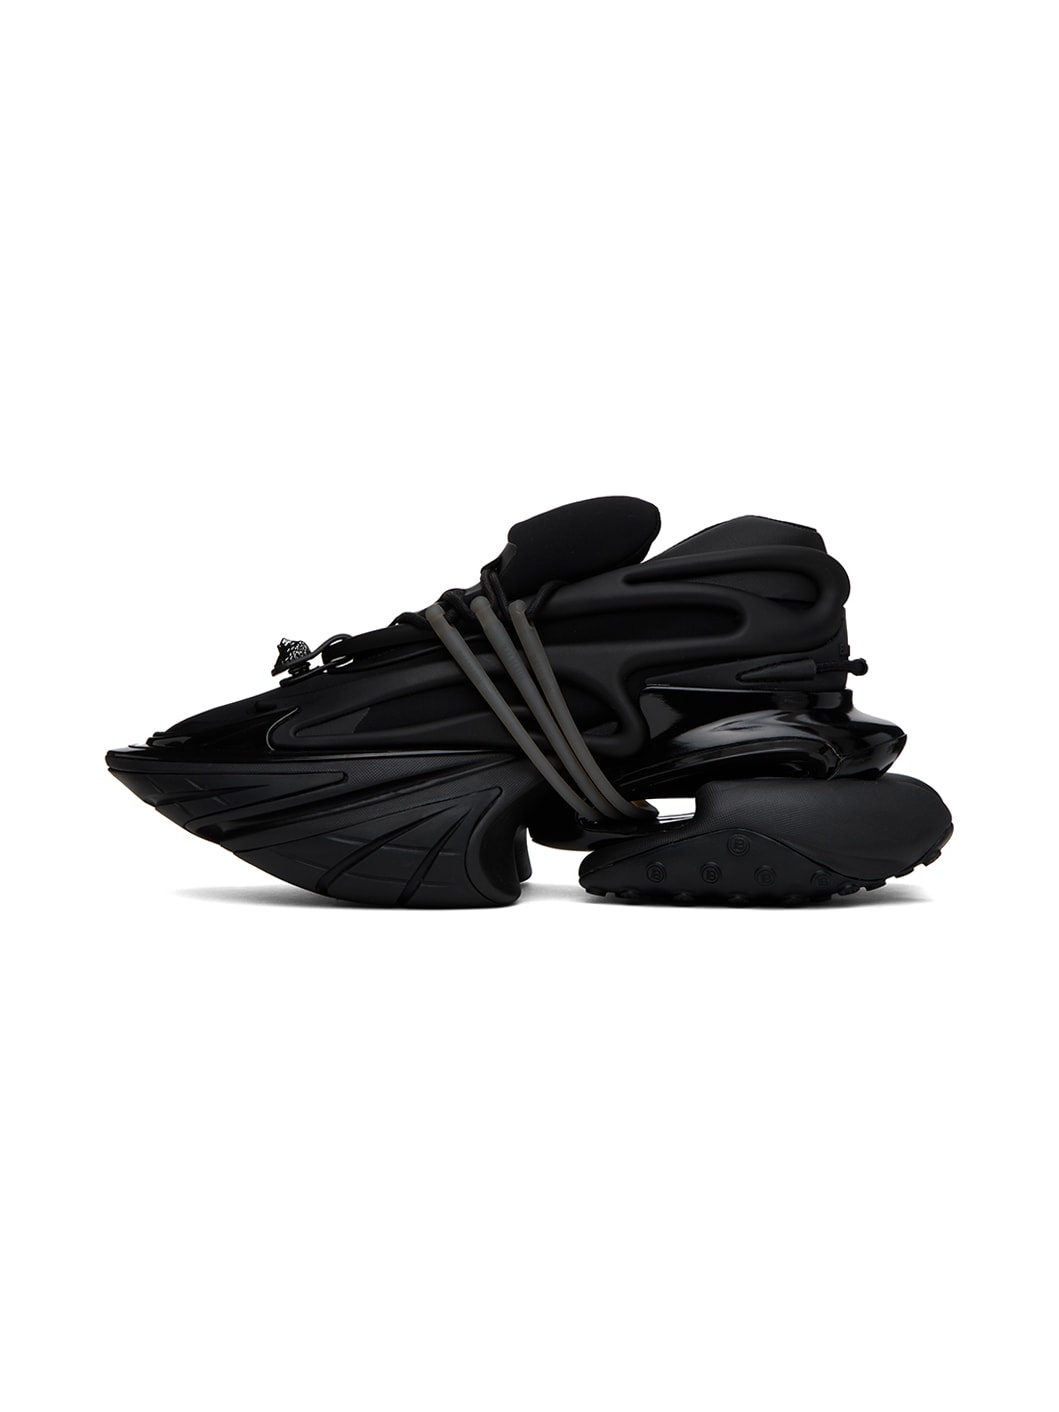 Black Unicorn Sneakers - 3